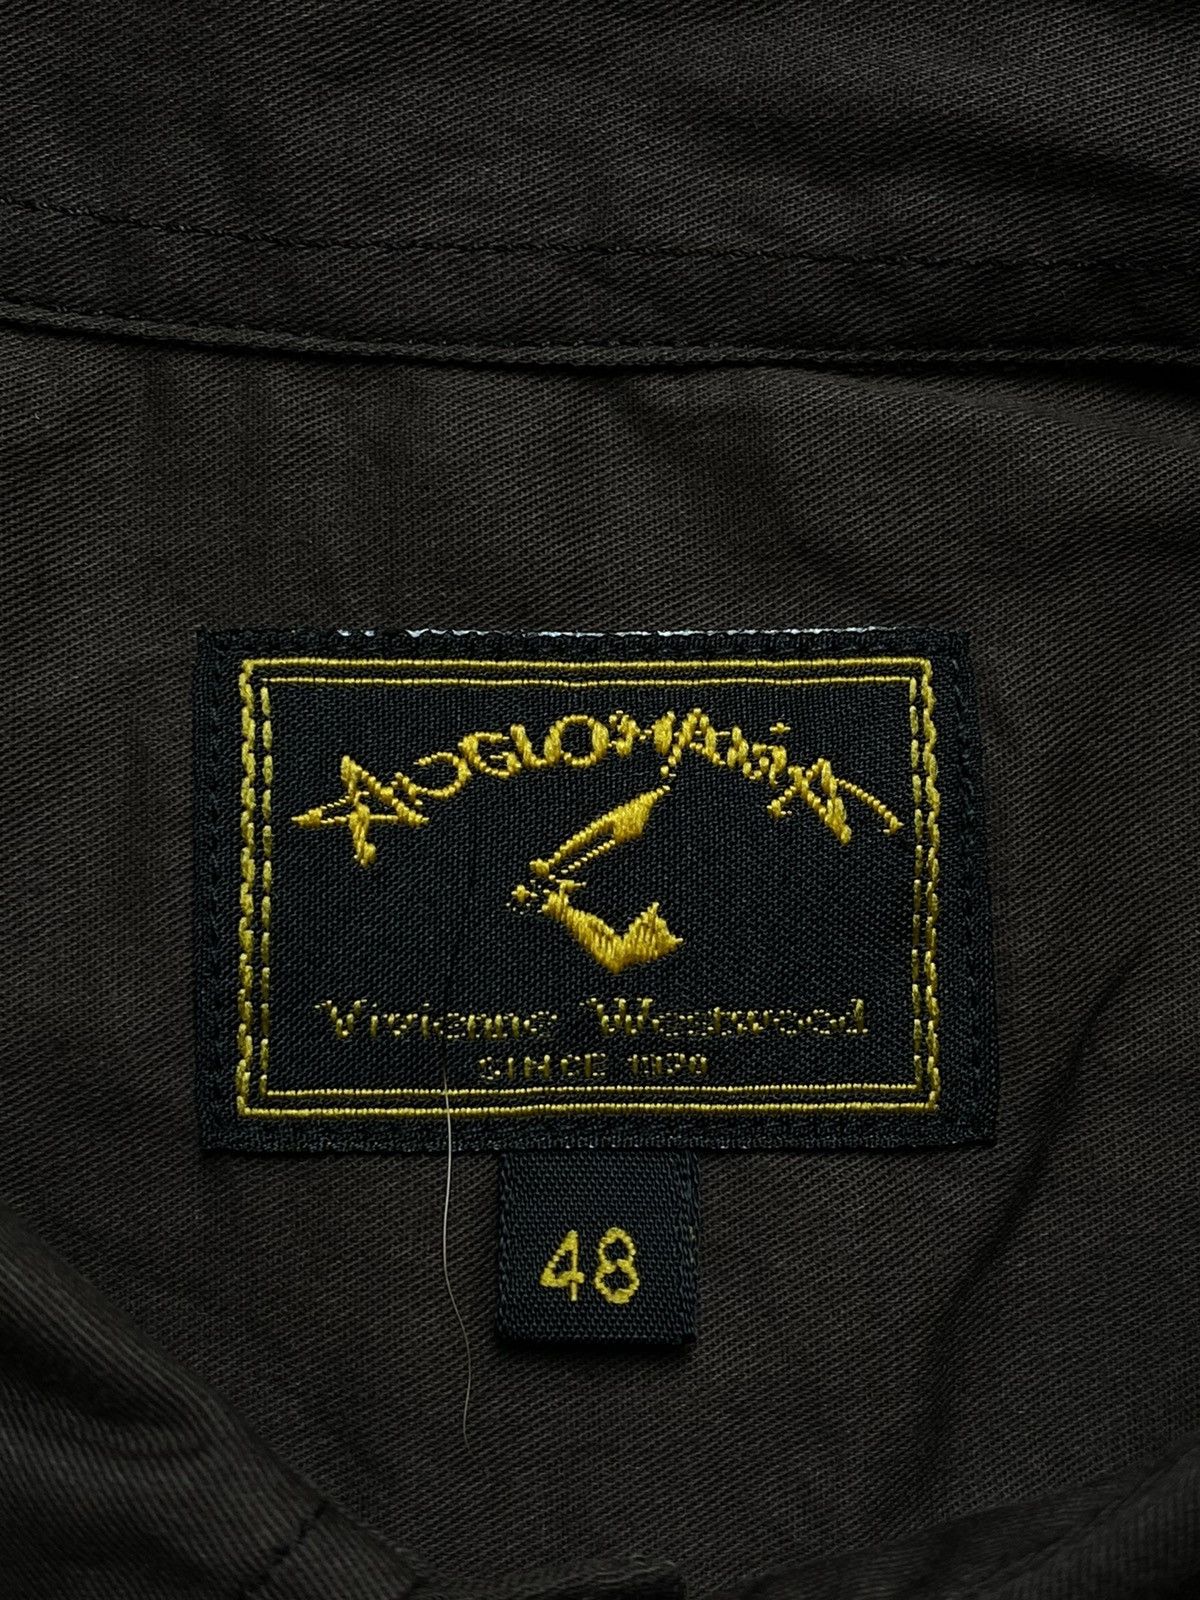 Vivienne Westwood 1990s Anglomania - World Ends Sword Button Shirt Size US L / EU 52-54 / 3 - 3 Thumbnail